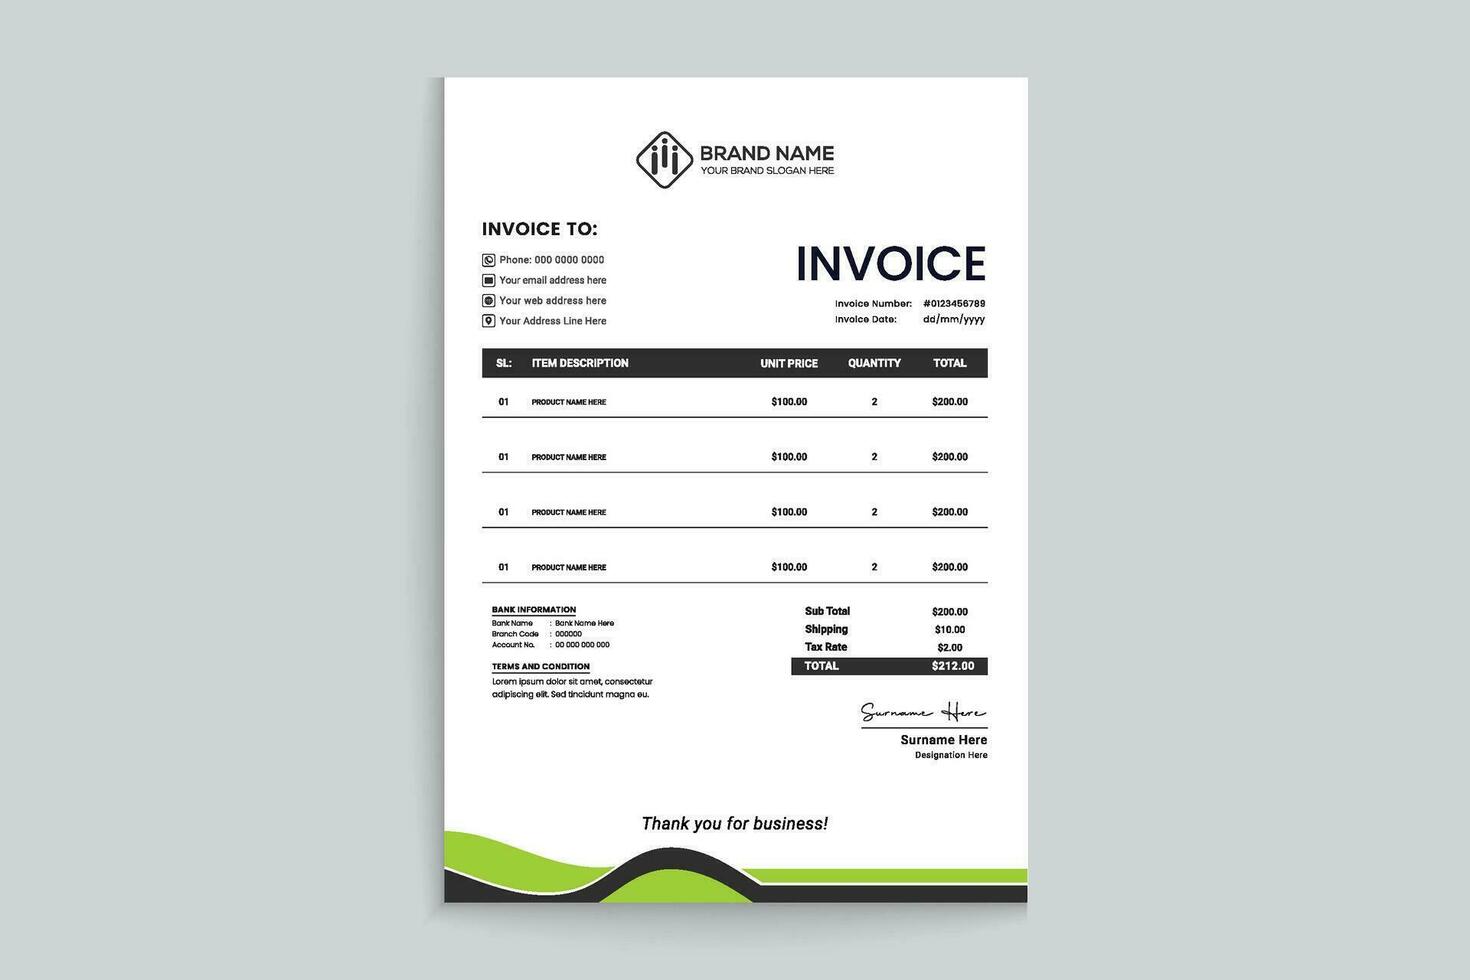 green elegant corporate invoice design vector